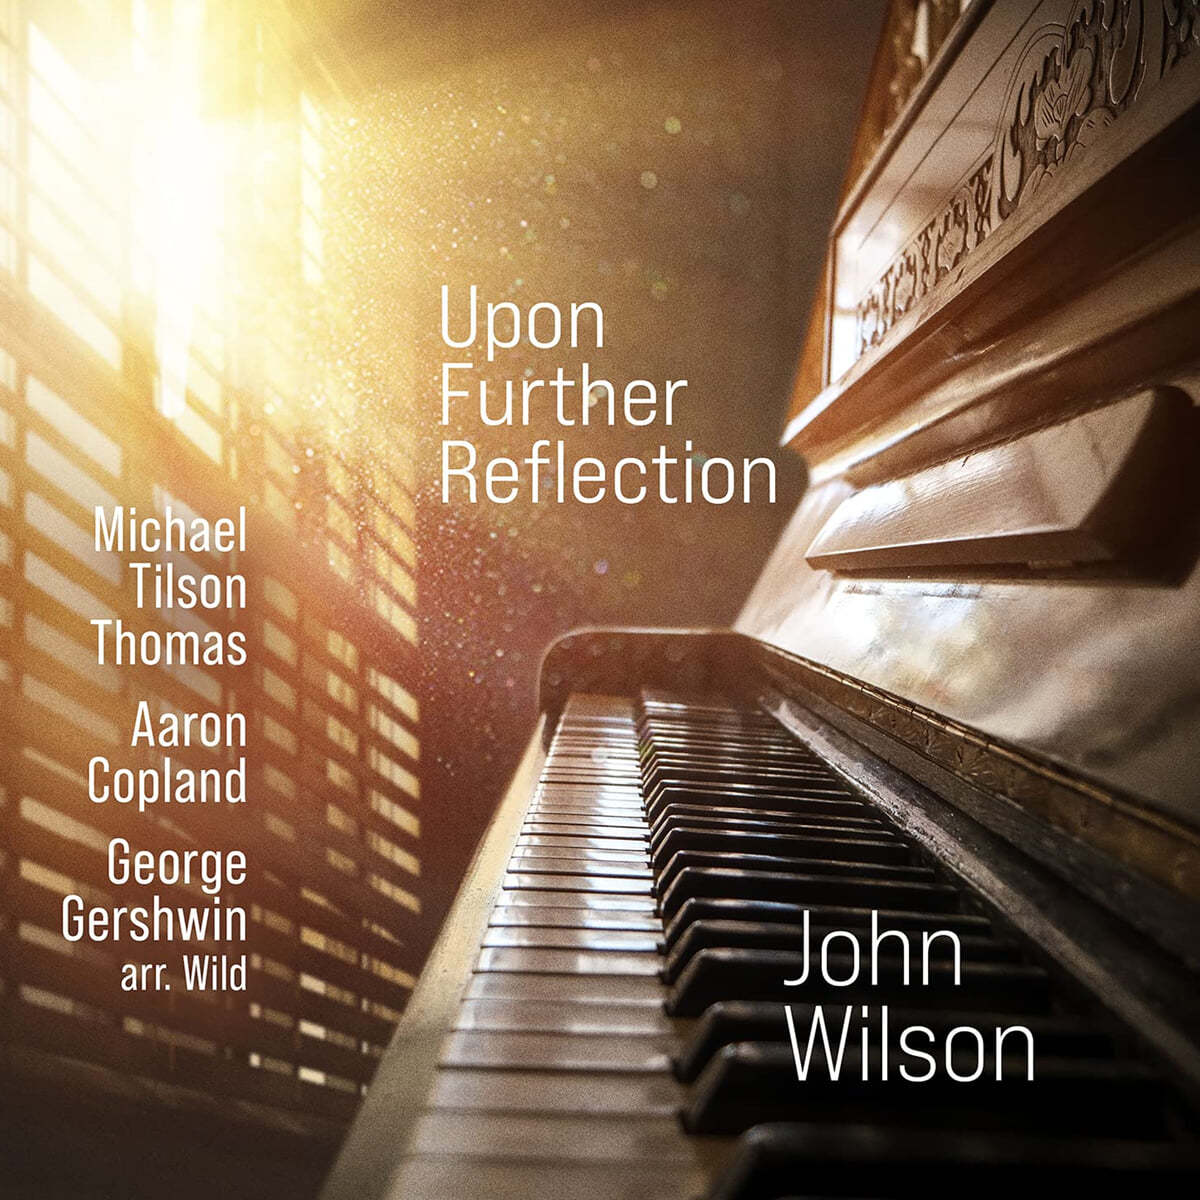 John Wilson 틸슨 토머스: '깊어지는 명상' / 와일드: 거슈윈 노래에 의한 에튀드 / 코플런드: 피아노 소나타 (Upon Further Reflection)